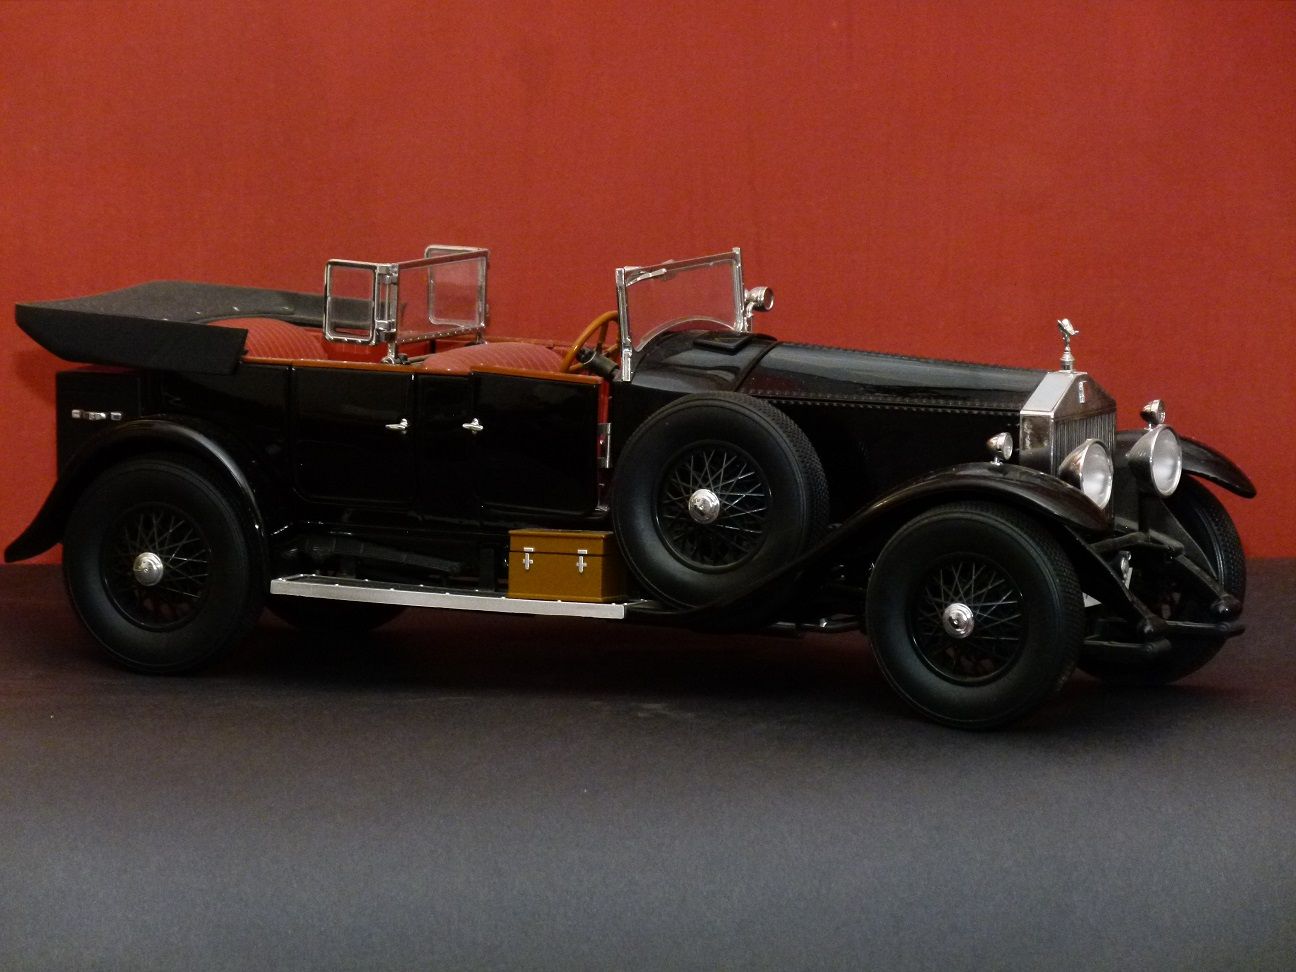 1925 Rolls-Royce Phantom I miniature diecast scale model cars